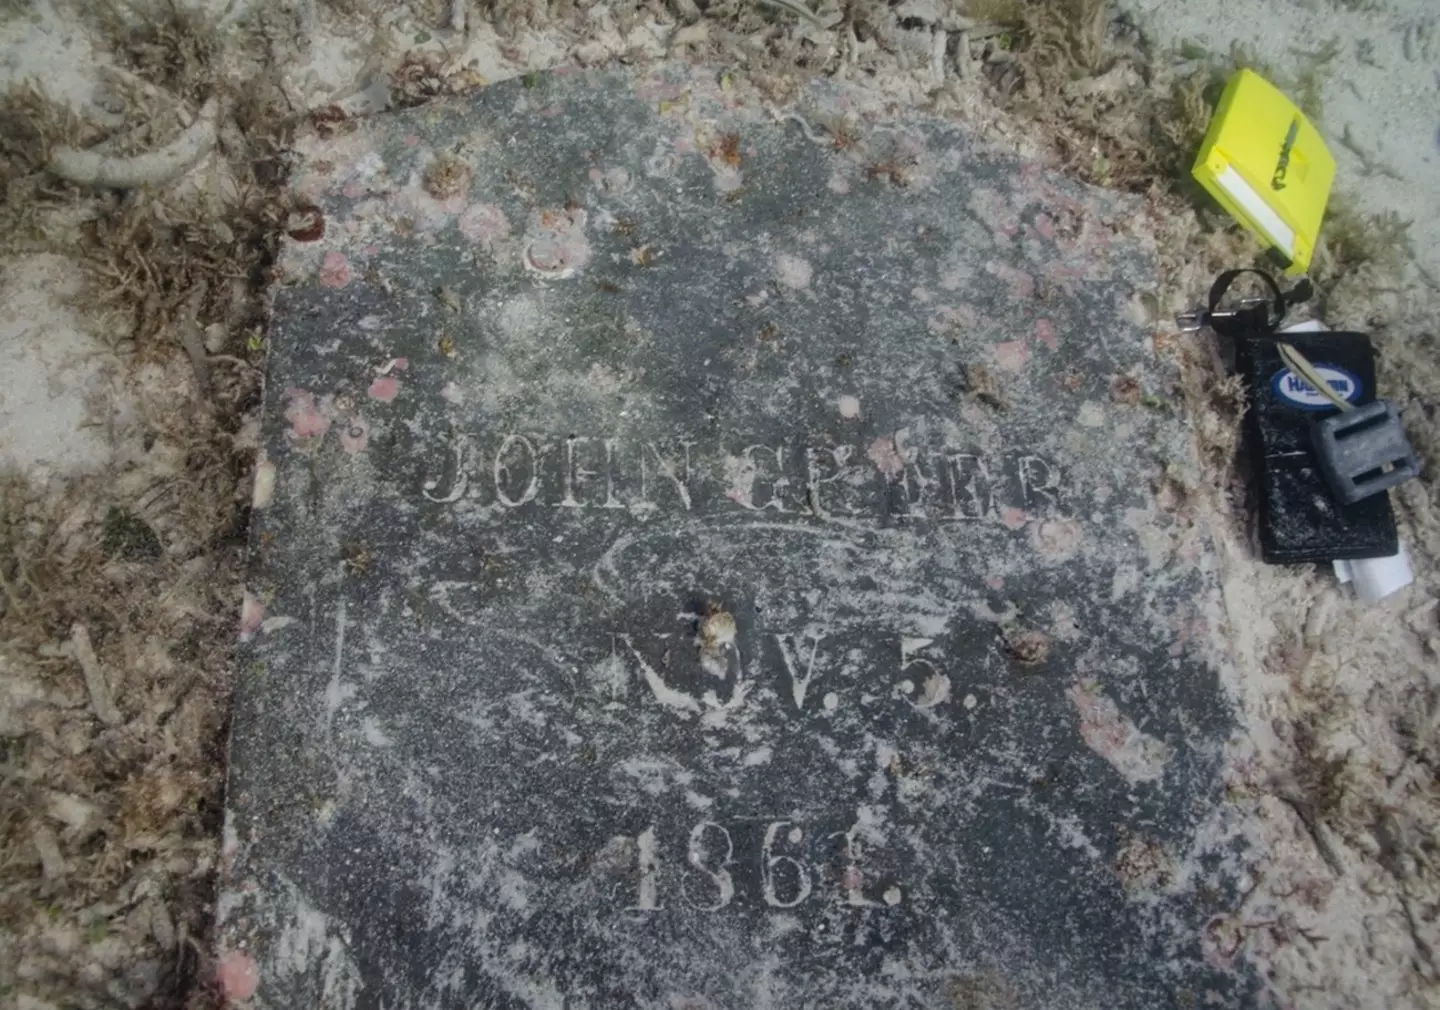 The grave belonged to Fort Jefferson labourer John Greer.